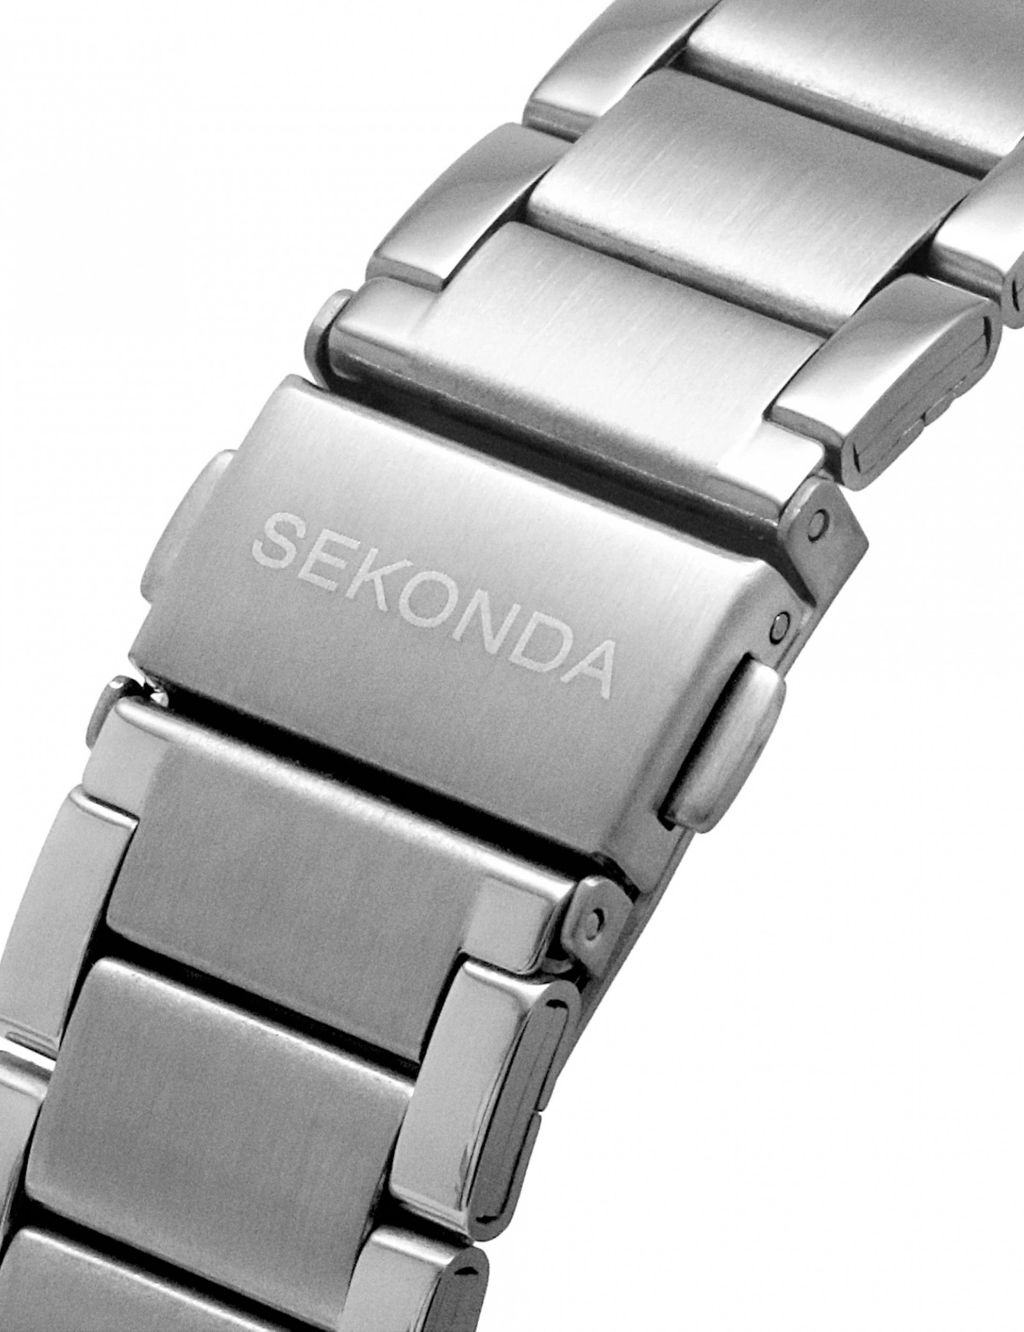 Sekonda Stainless Steel Watch image 3